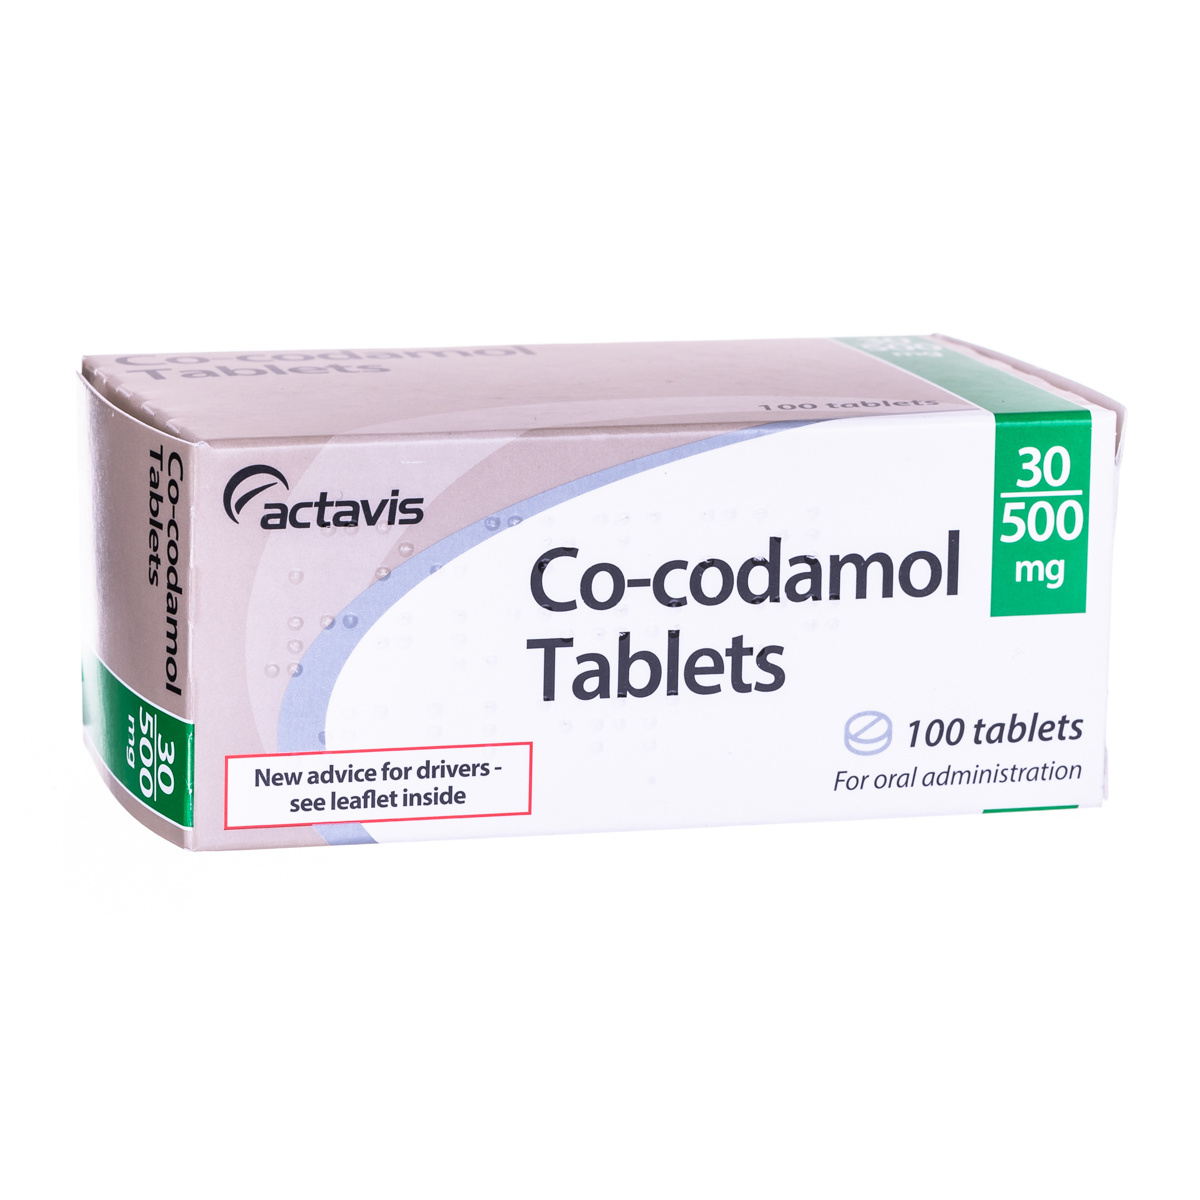 Co-codamol for adults